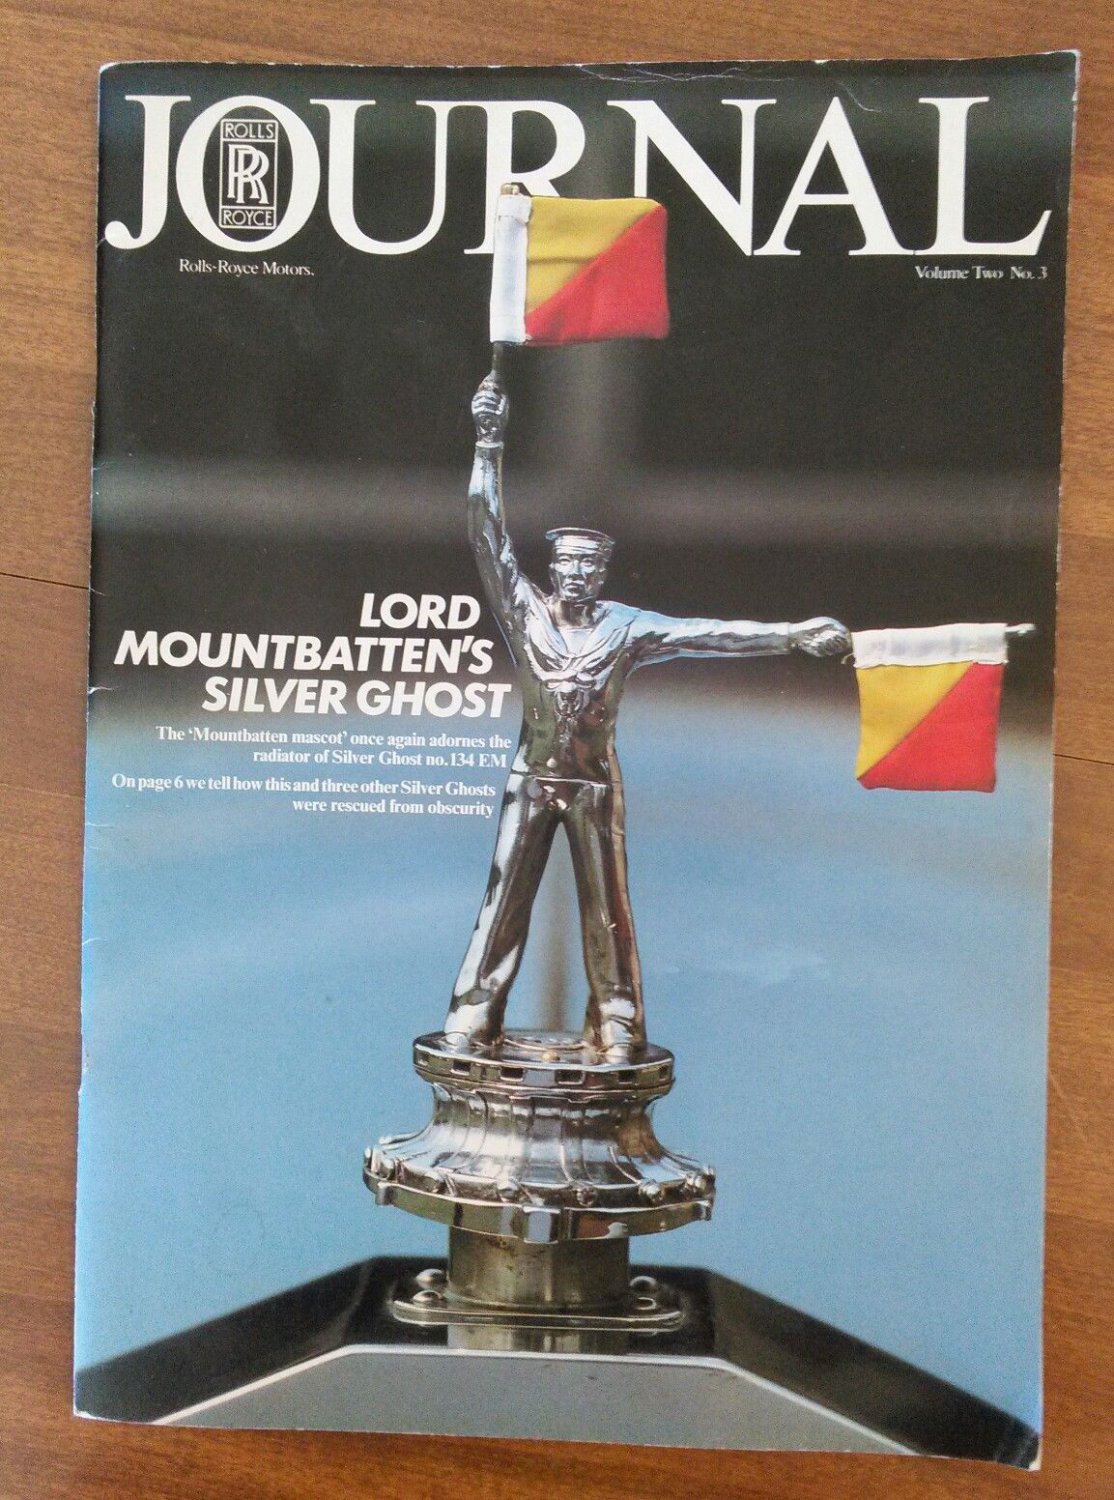 1982 Rolls Royce Motors Journal Magazine Stories History Great Pics